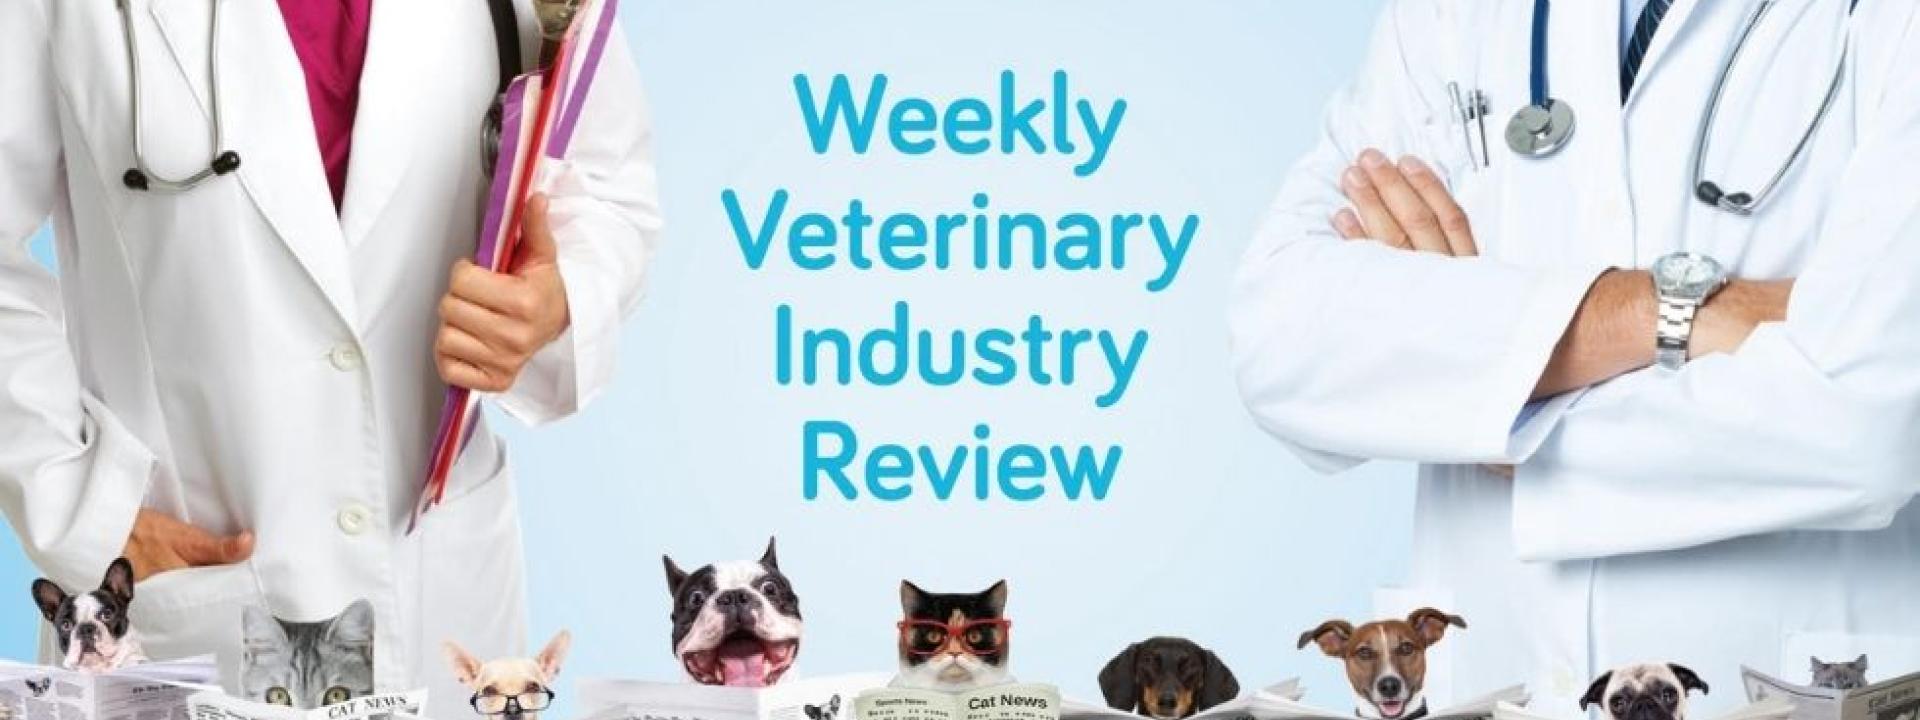 Weekly Veterinary Industry Review by GeniusVets